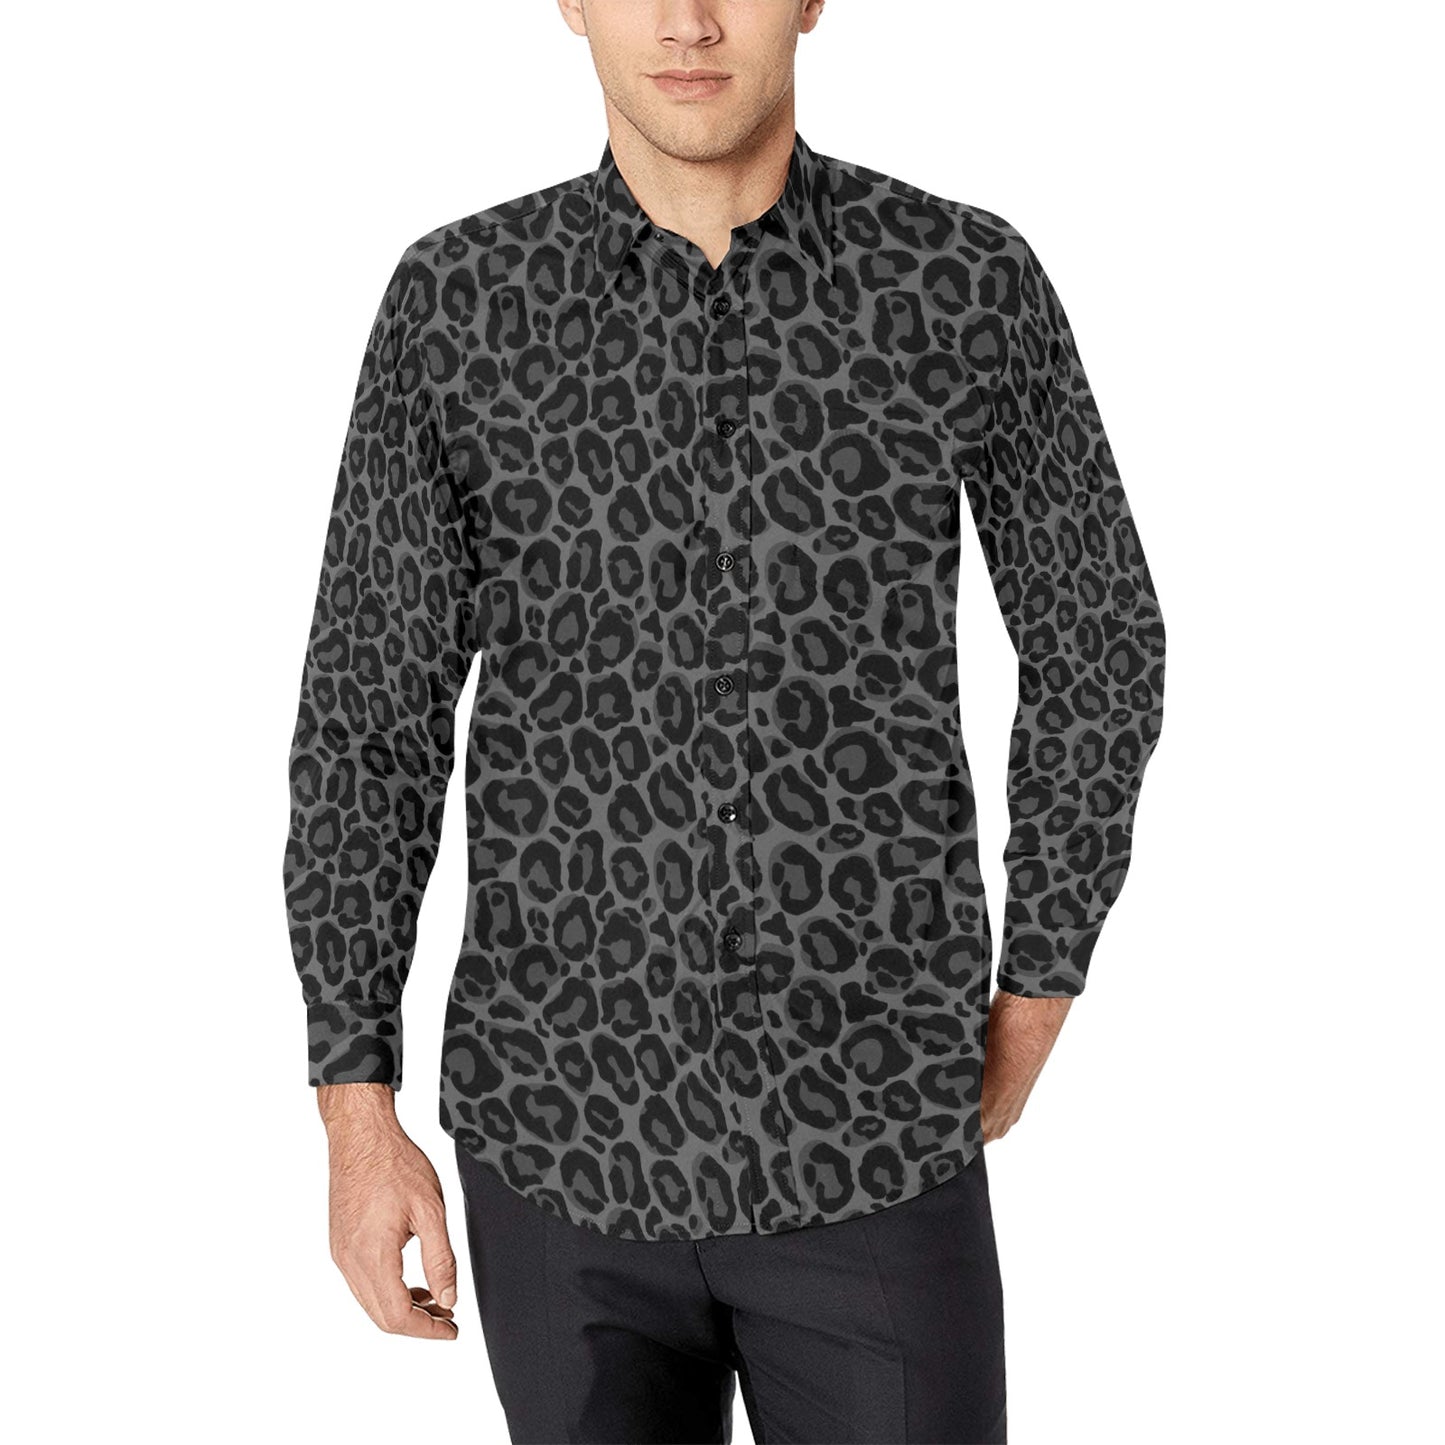 Black Leopard Men Button Up Shirt, Long Sleeve cheetah Animals Print Grey Buttoned Collar Dress Shirt with Chest Pocket Starcove Fashion